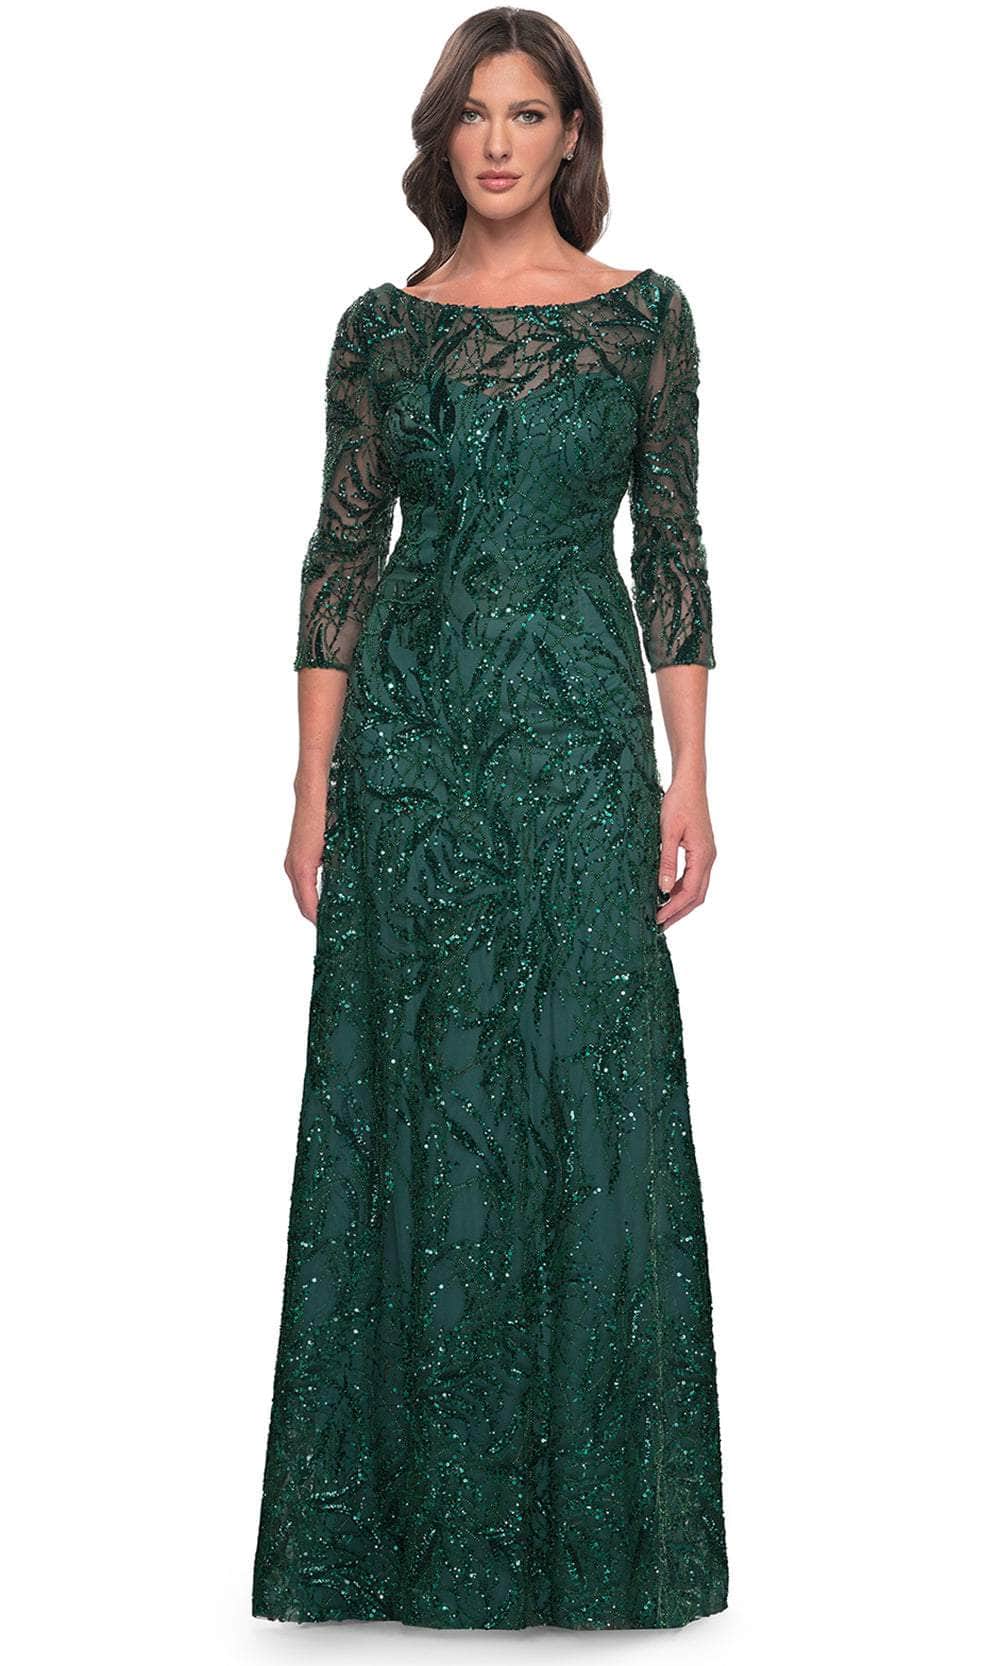 La Femme 31690 - Illusion Sequin Formal Dress
